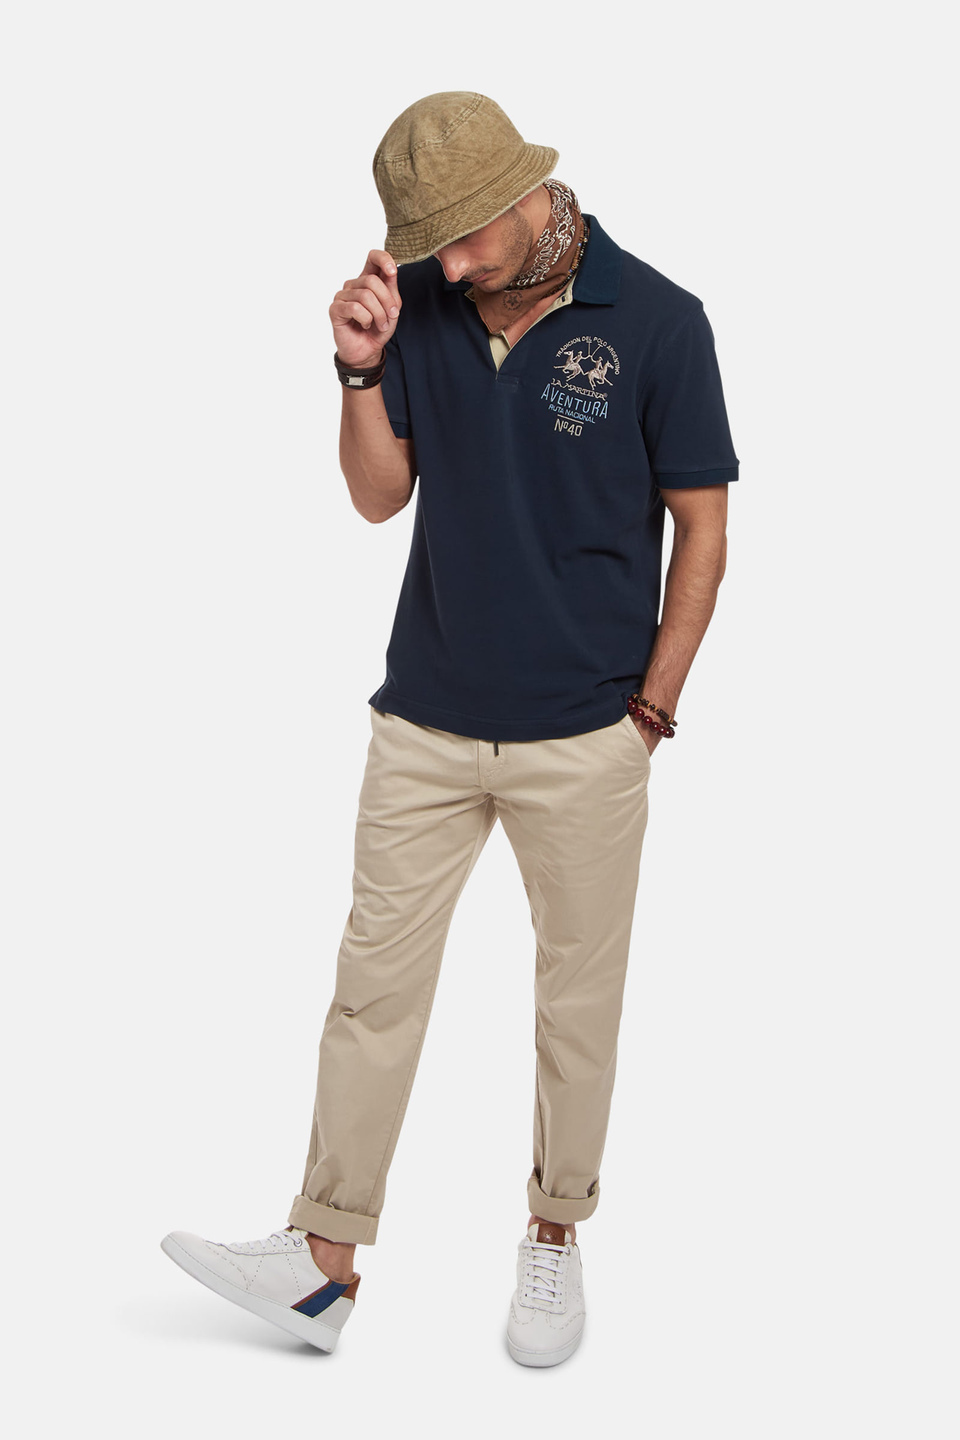 Men's short-sleeved, regular fit polo shirt - La Martina - Official Online Shop